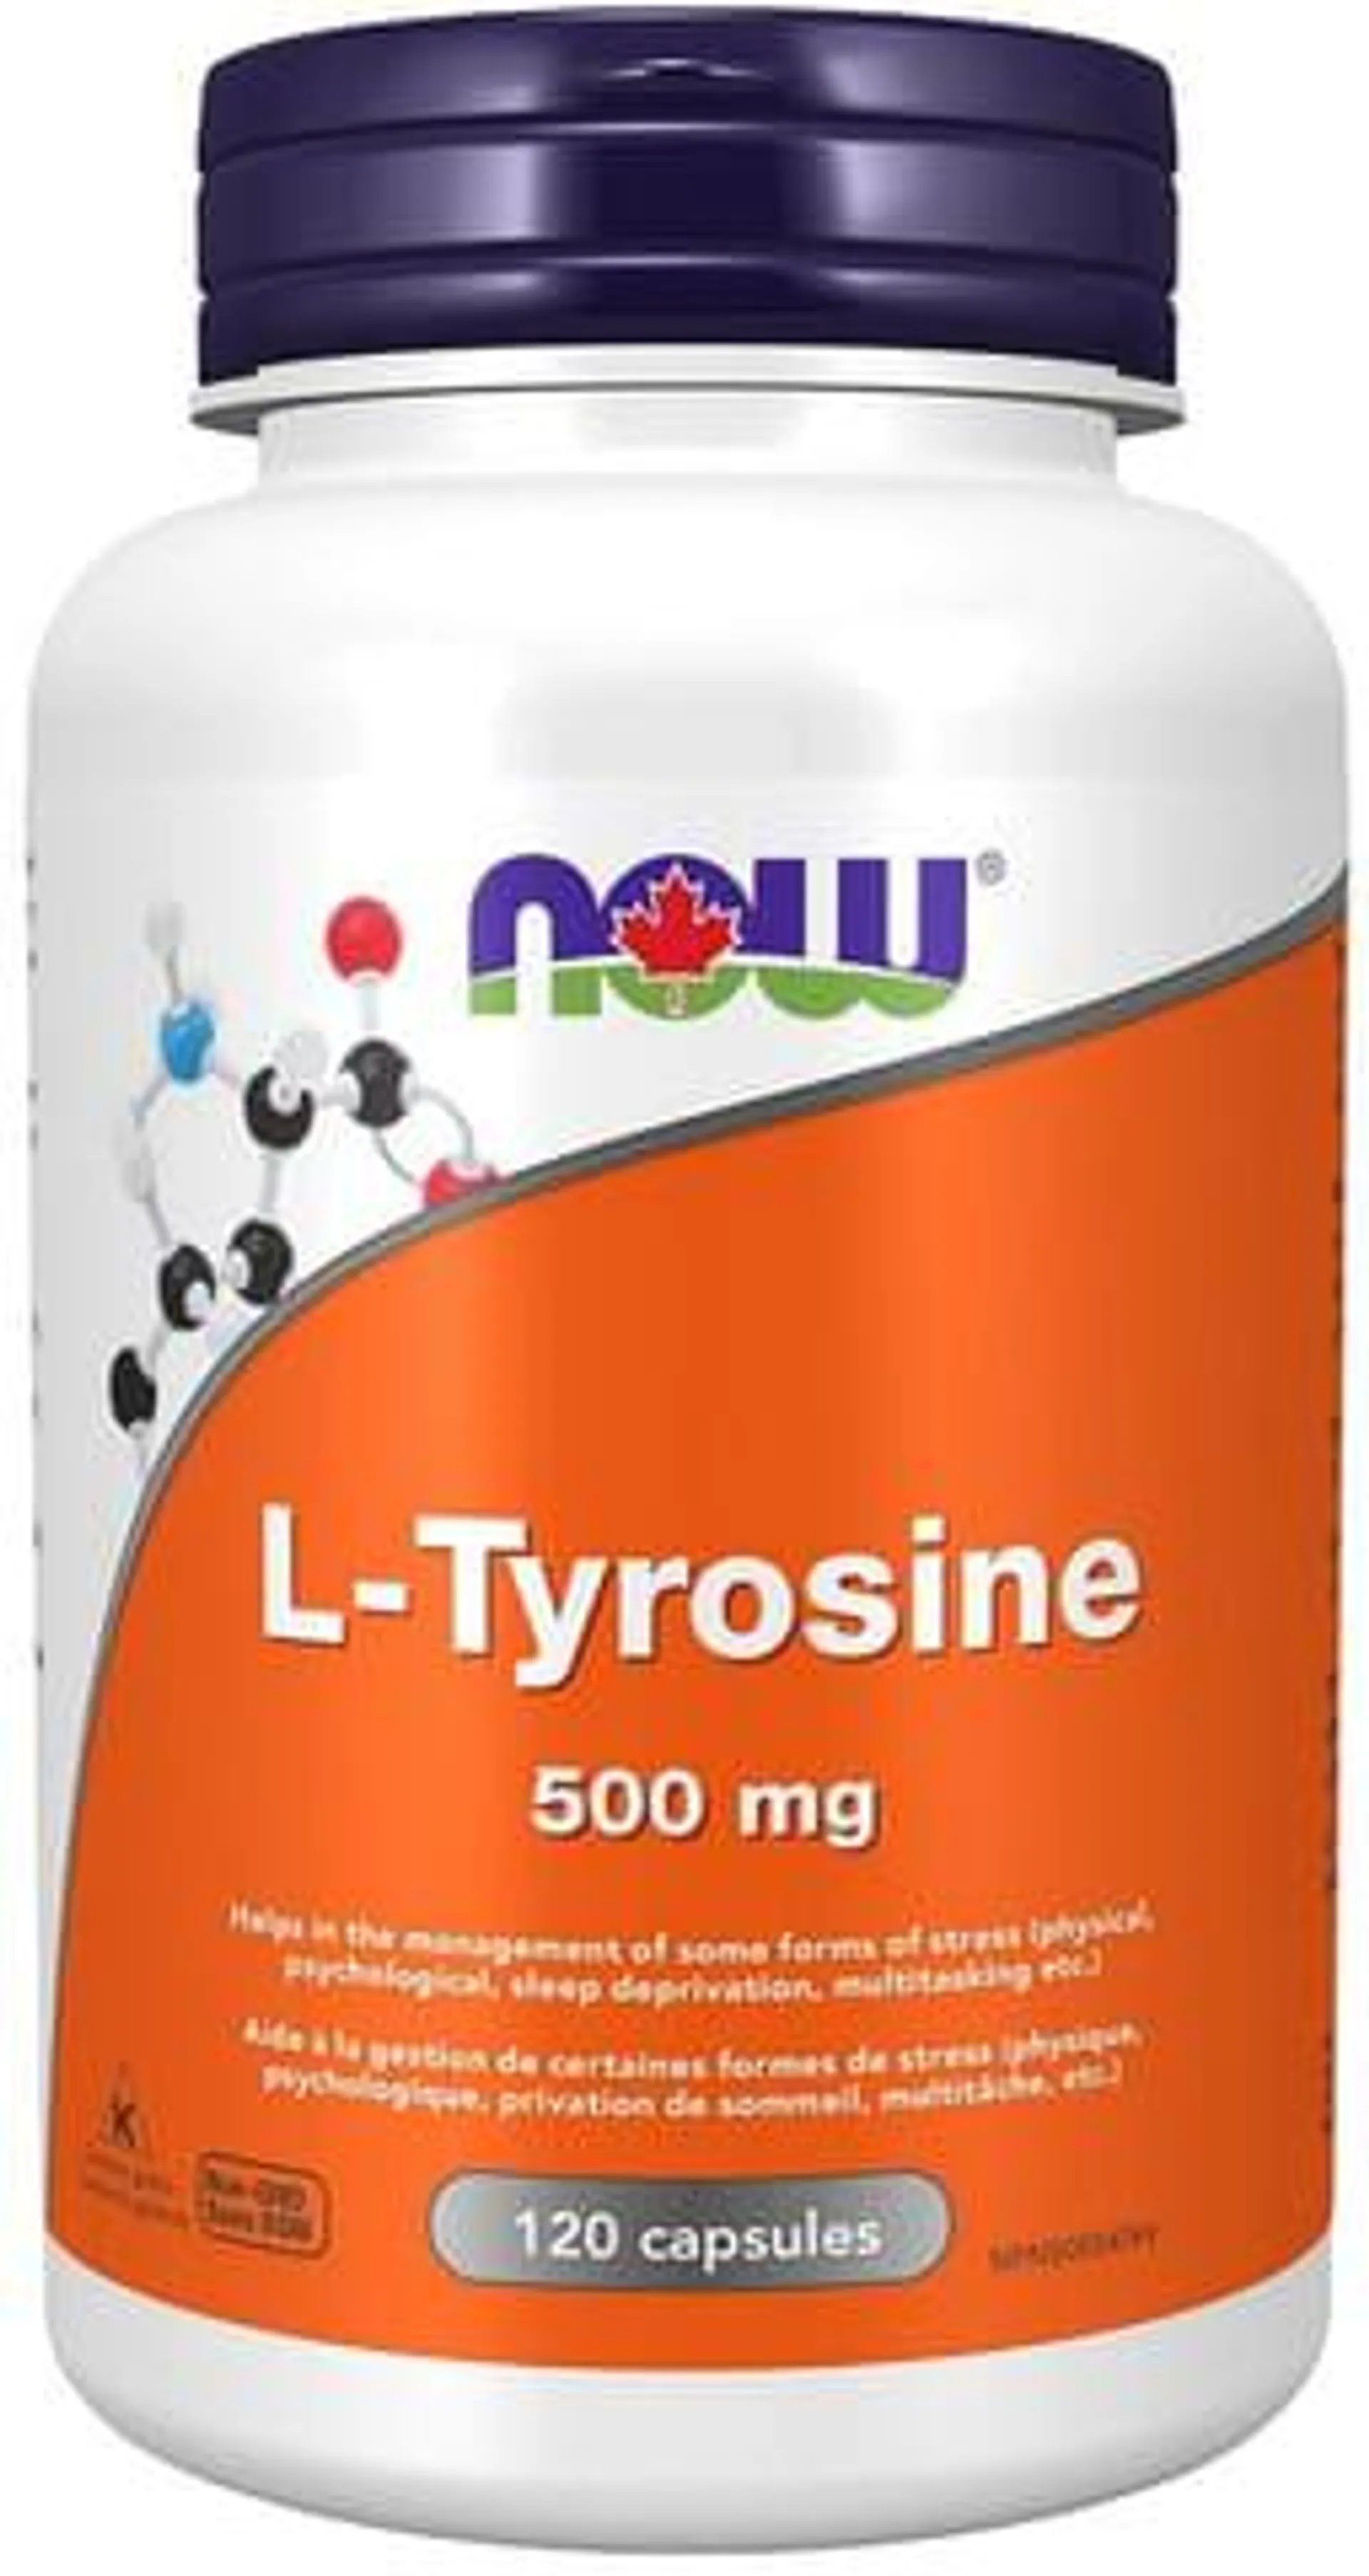 Acides aminés - L-Tyrosine 500 mg